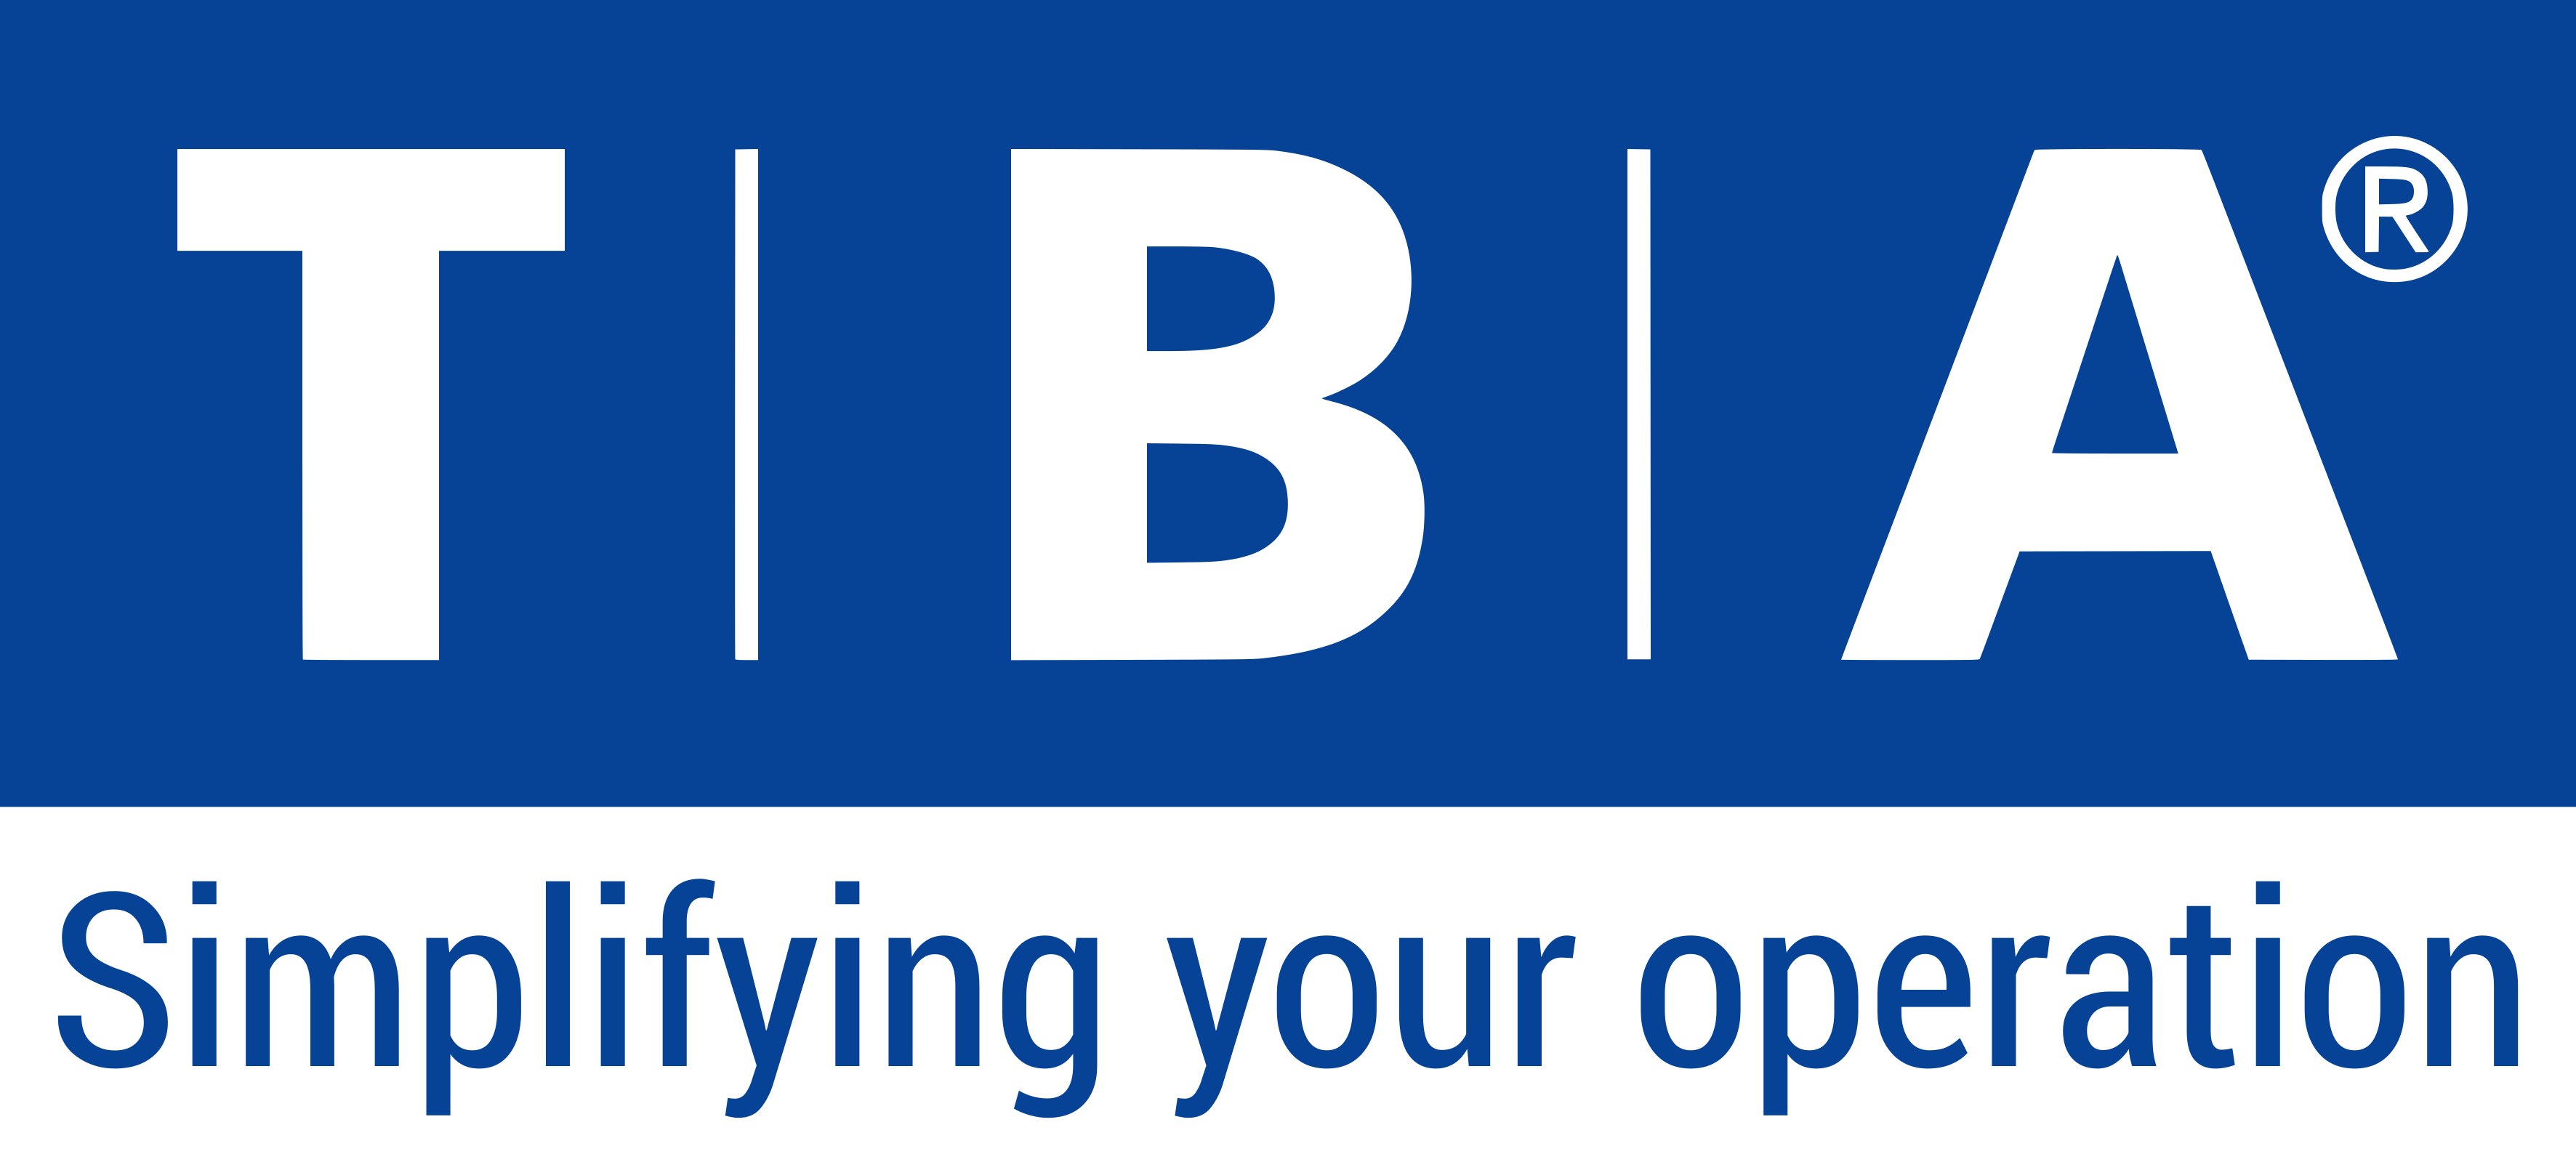 TBA Logo - TBA - TBA home page